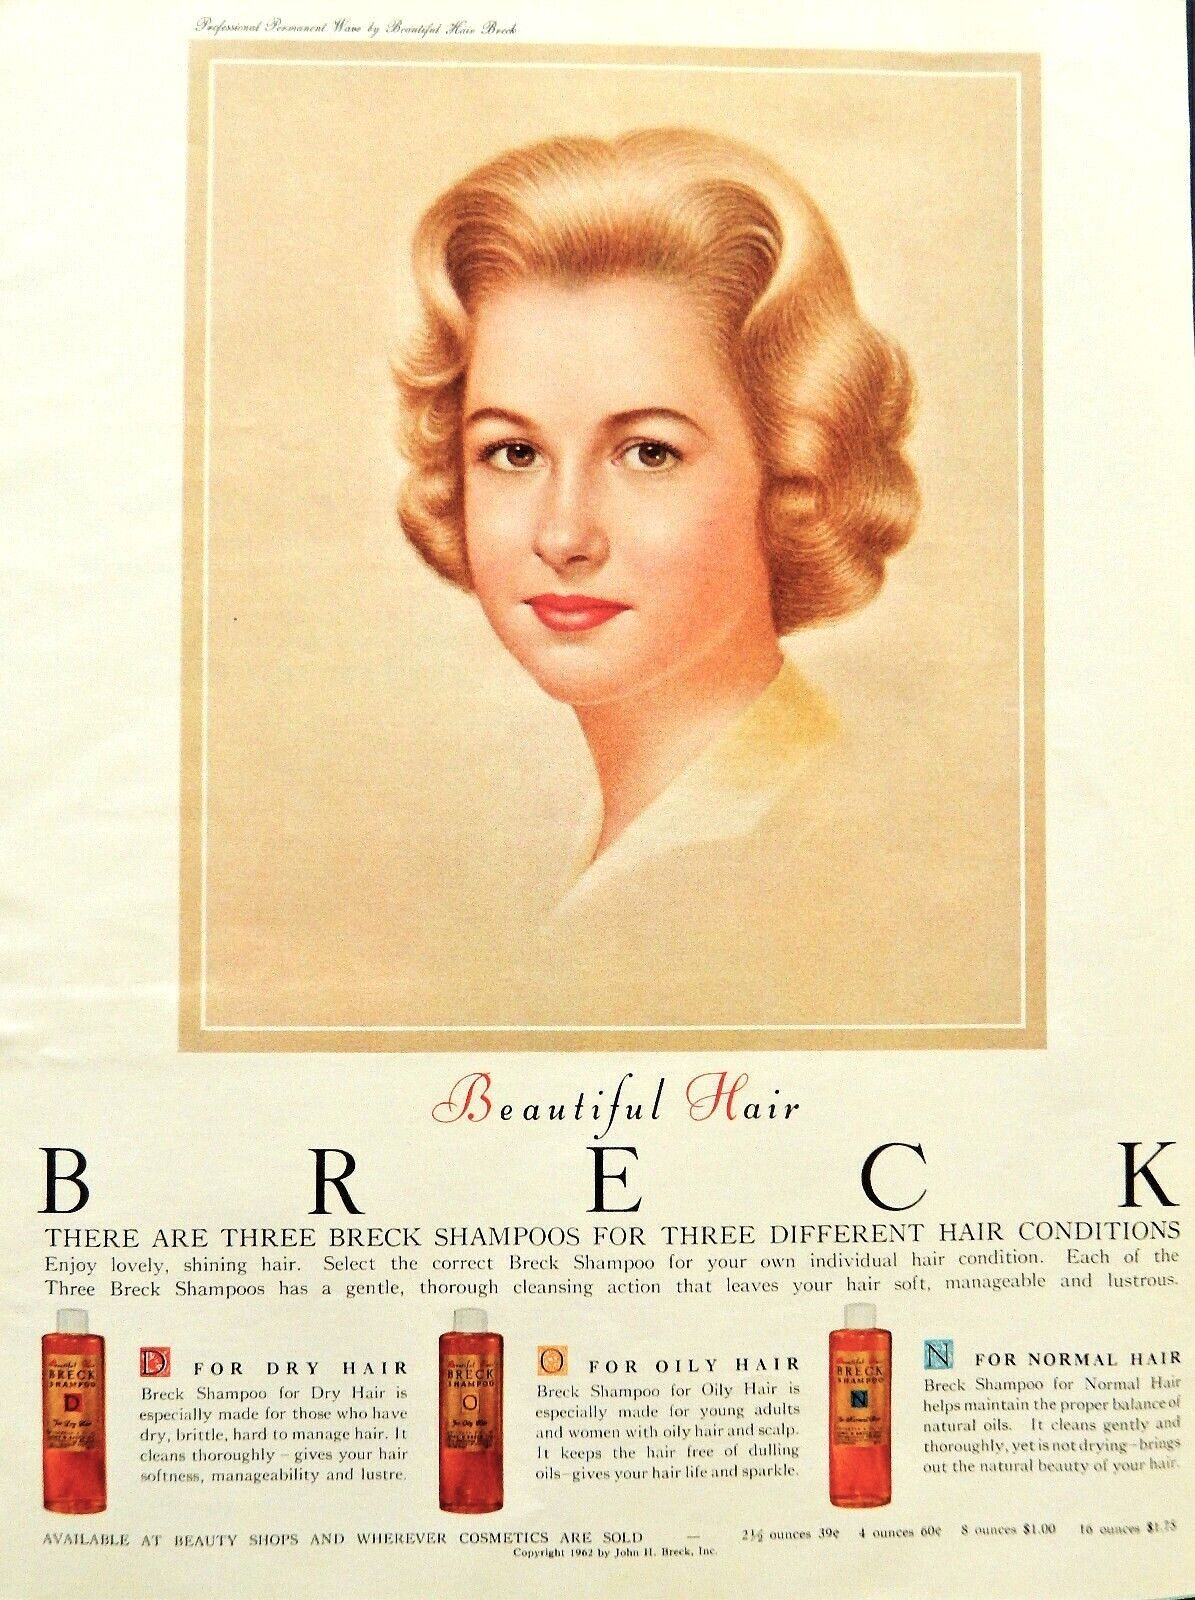 Breck girl shampoo ad vintage 1962 original advertisement 13 x 10 inches